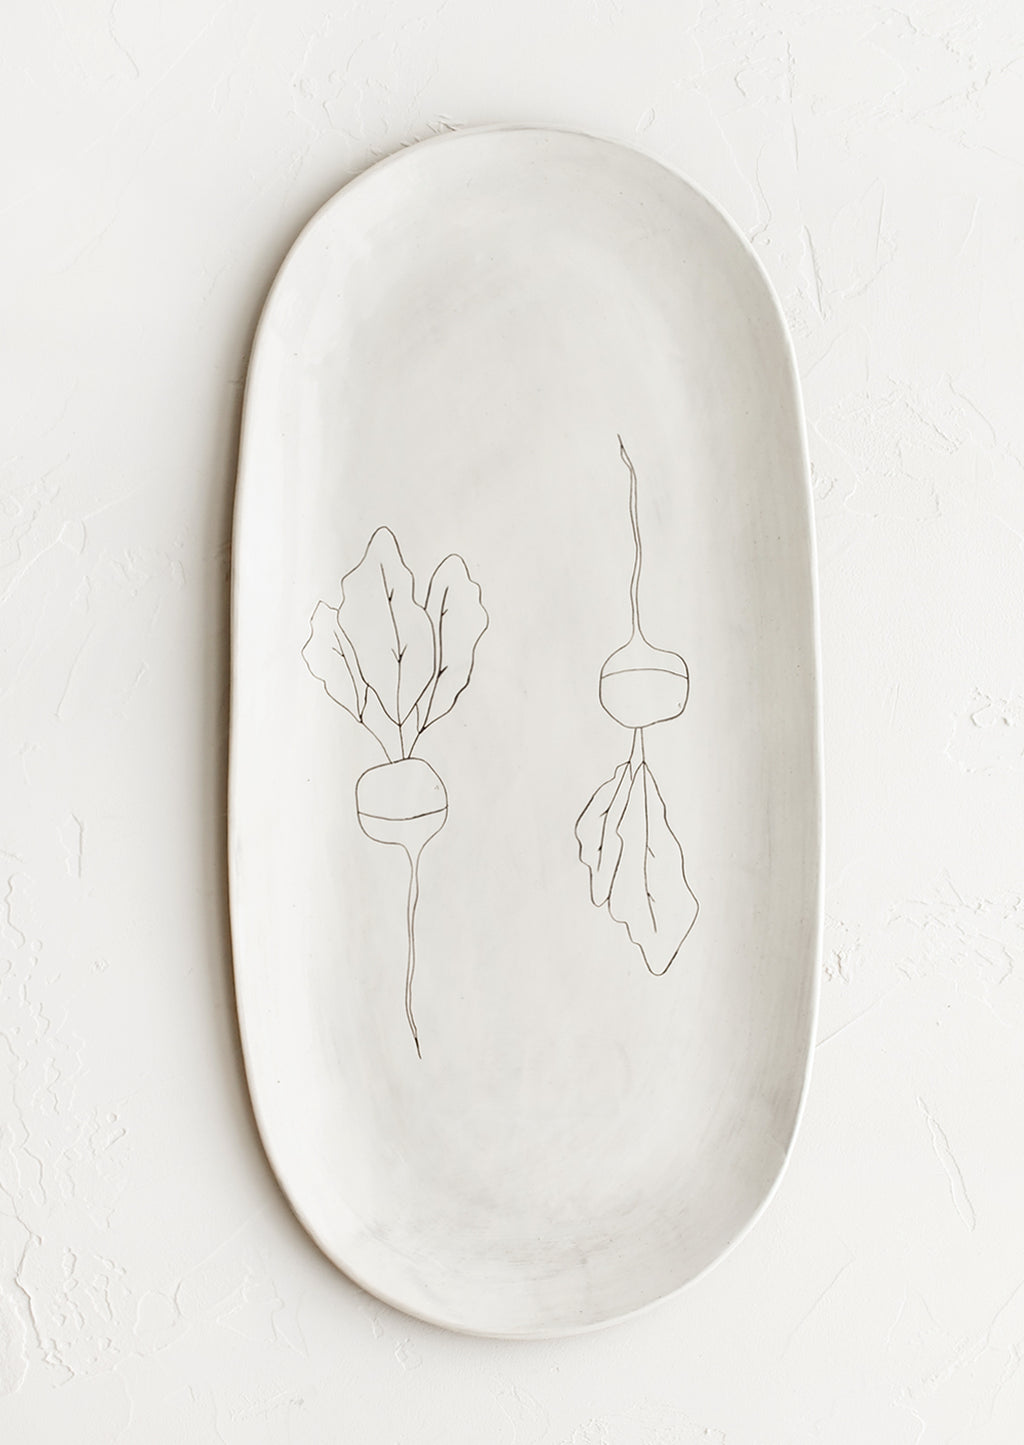 Radish: An oval shaped ceramic serving platter with hand drawn radish illustration at center.